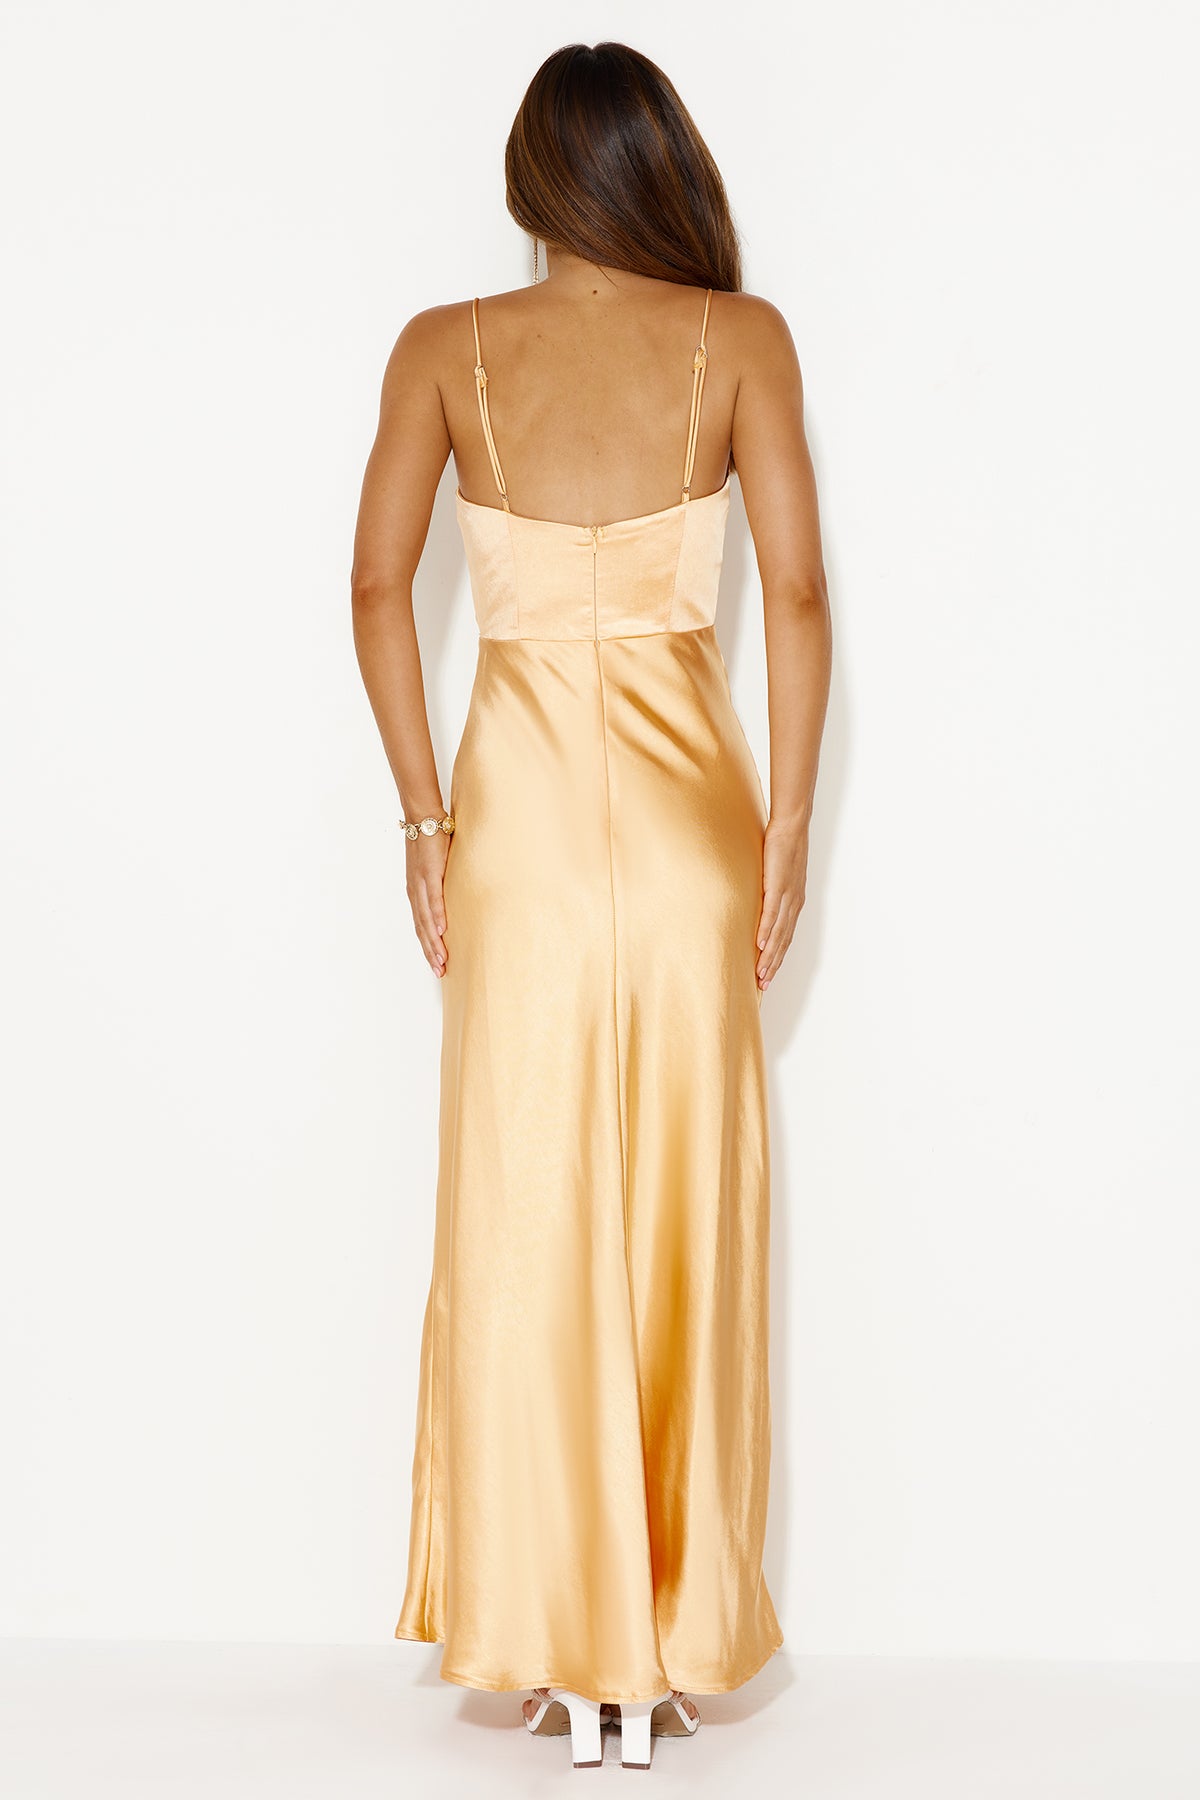 Shop Formal Dress - Welcome Spring Satin Maxi Dress Orange fourth image